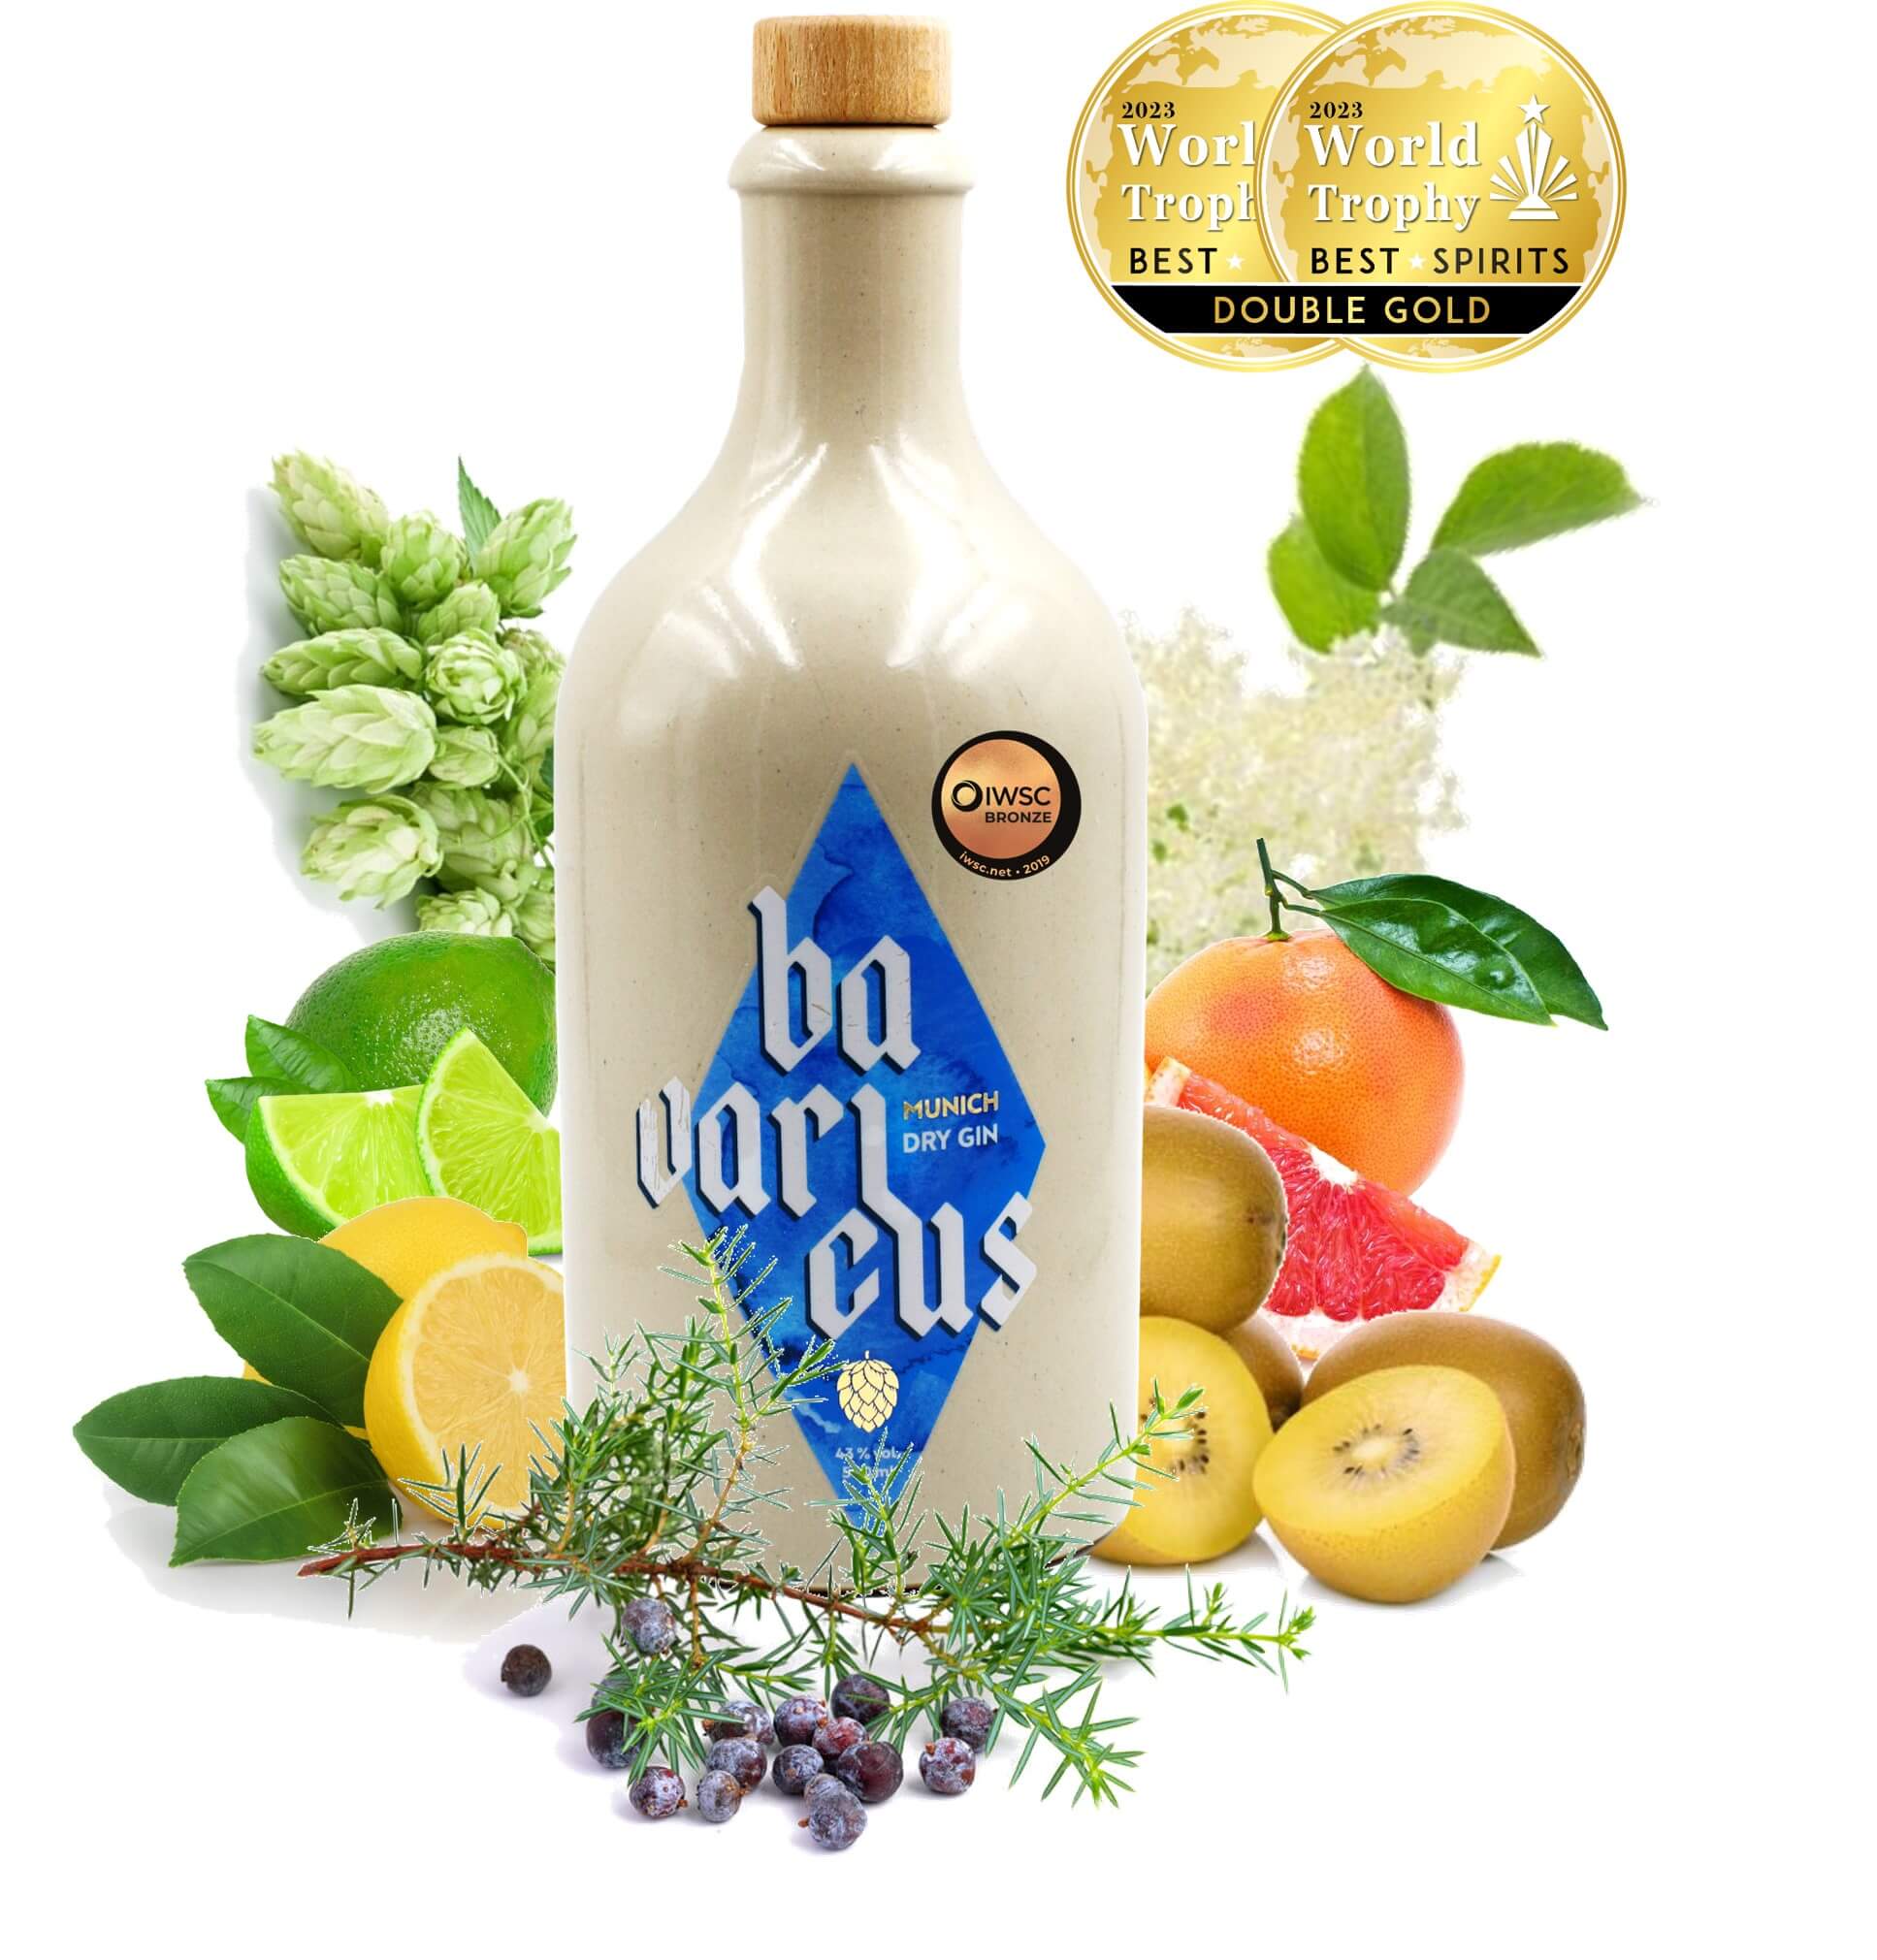 Bavaricus - Munich Dry Gin